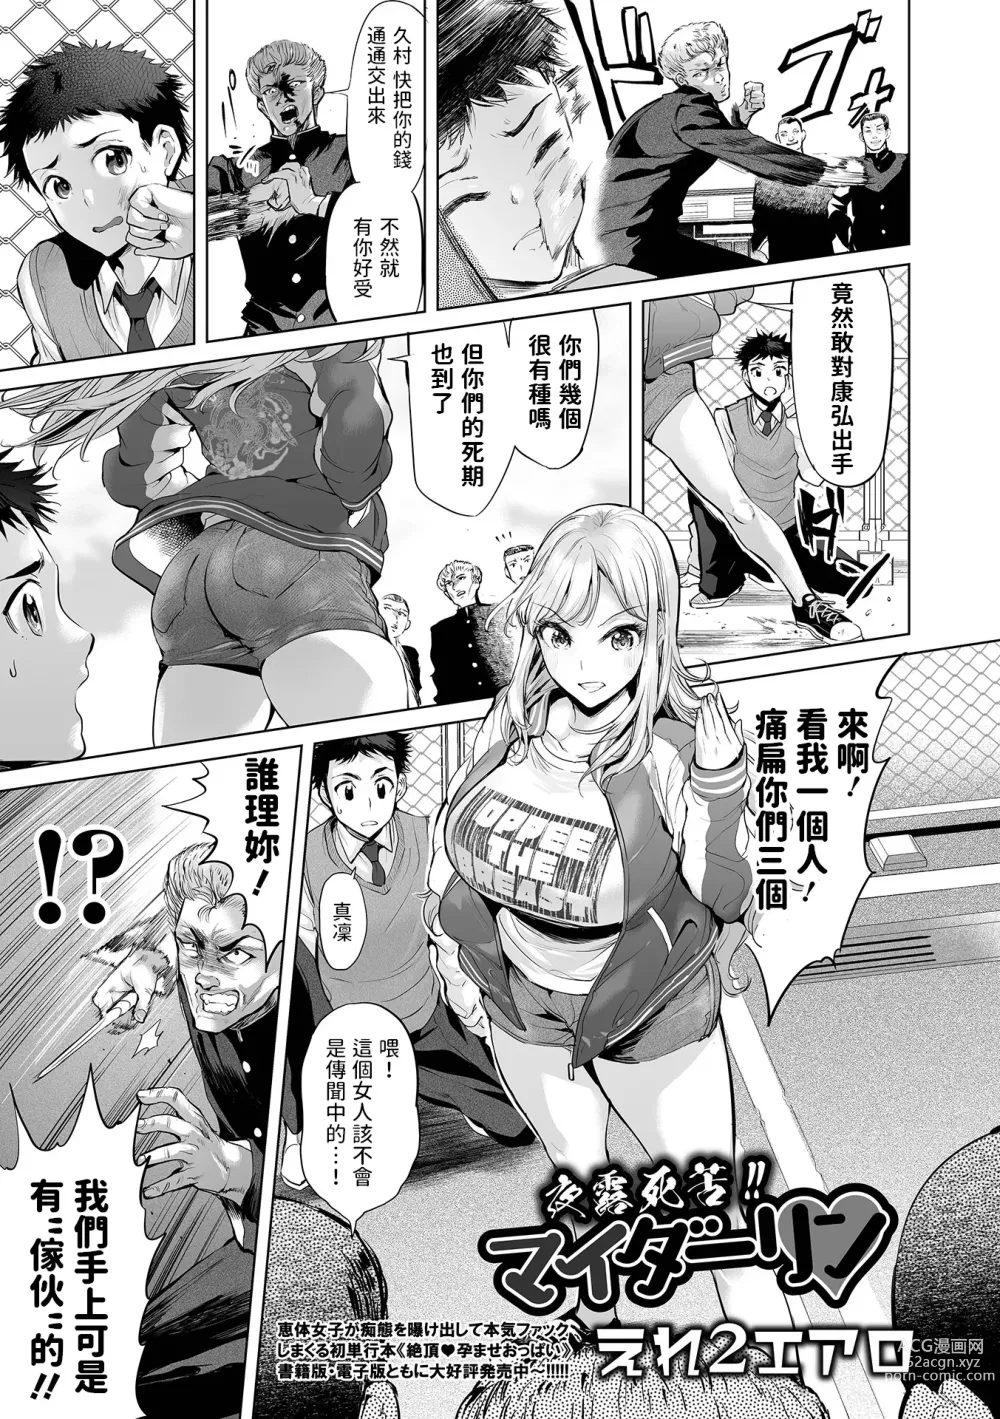 Page 1 of manga Yoroshiku!! My Darling